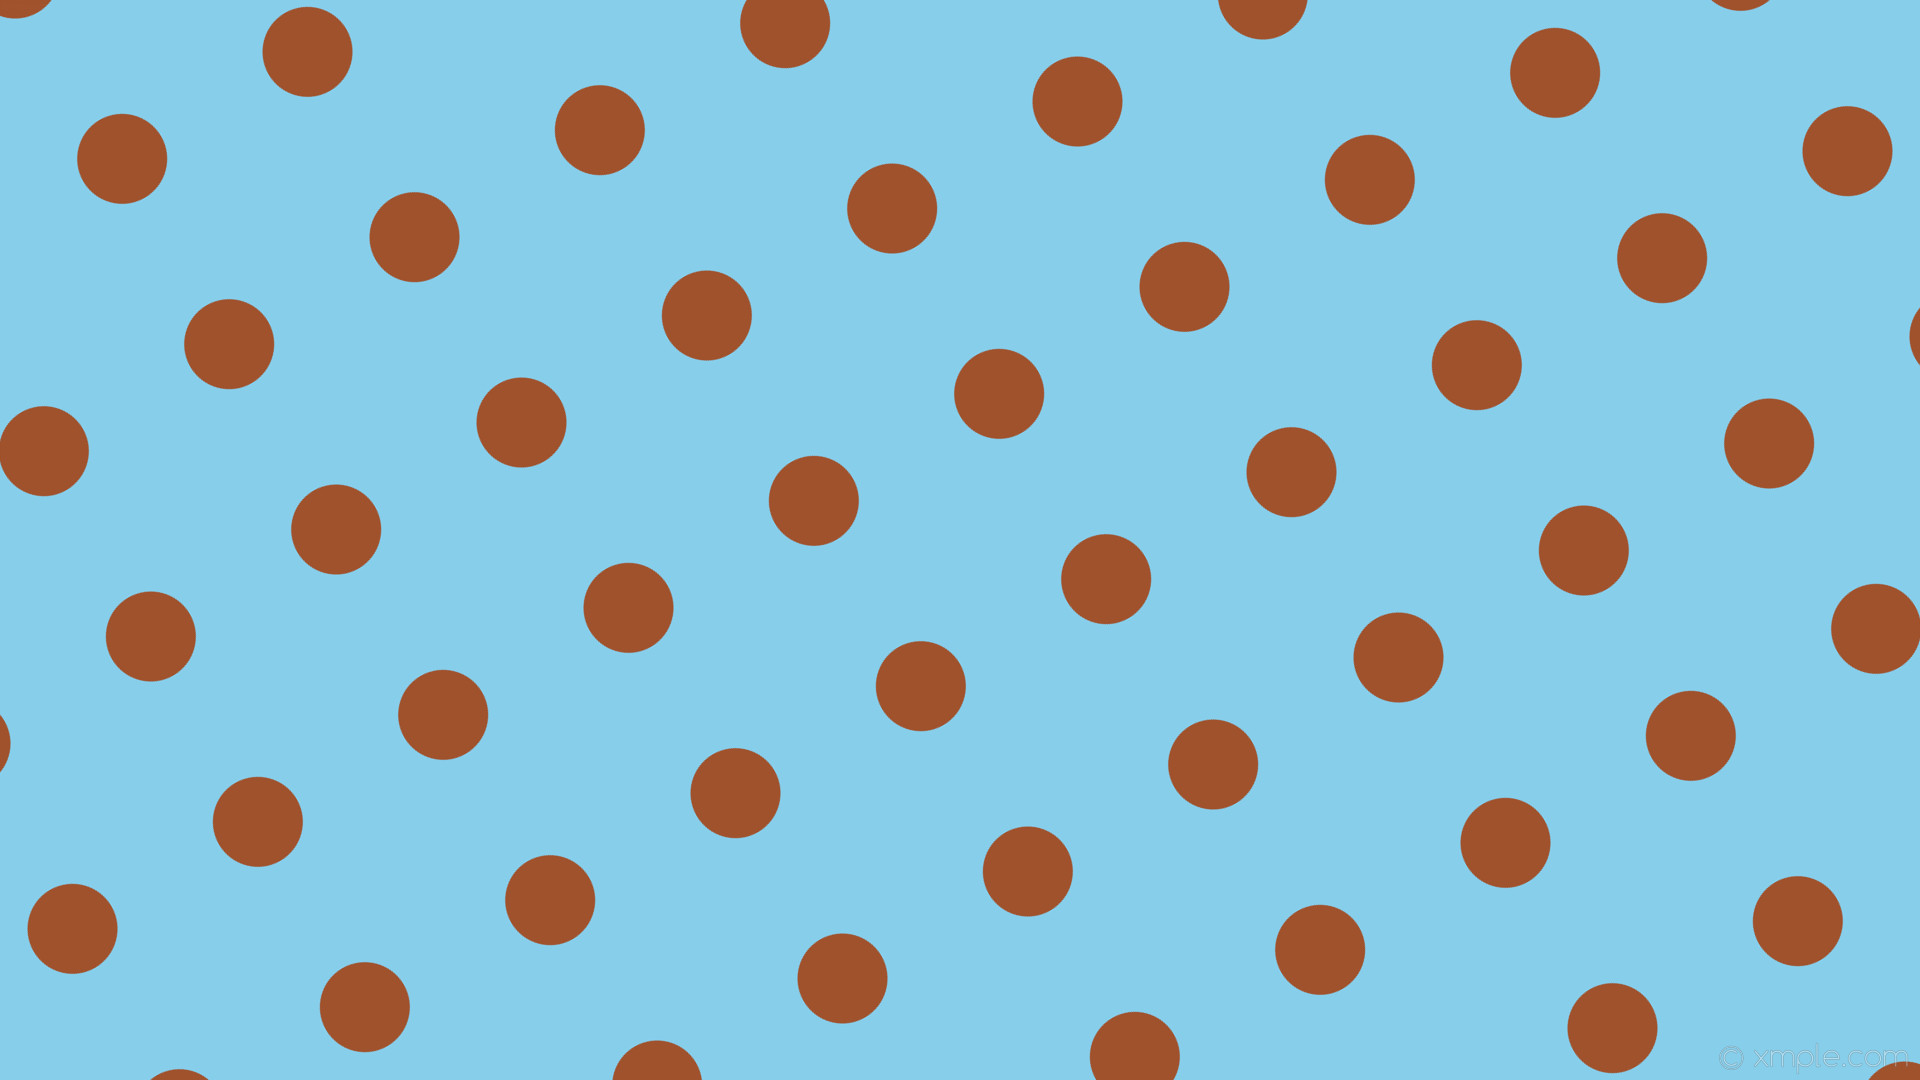 wallpaper spots brown dots blue polka sky blue sienna #87ceeb #a0522d 210Â°  90px